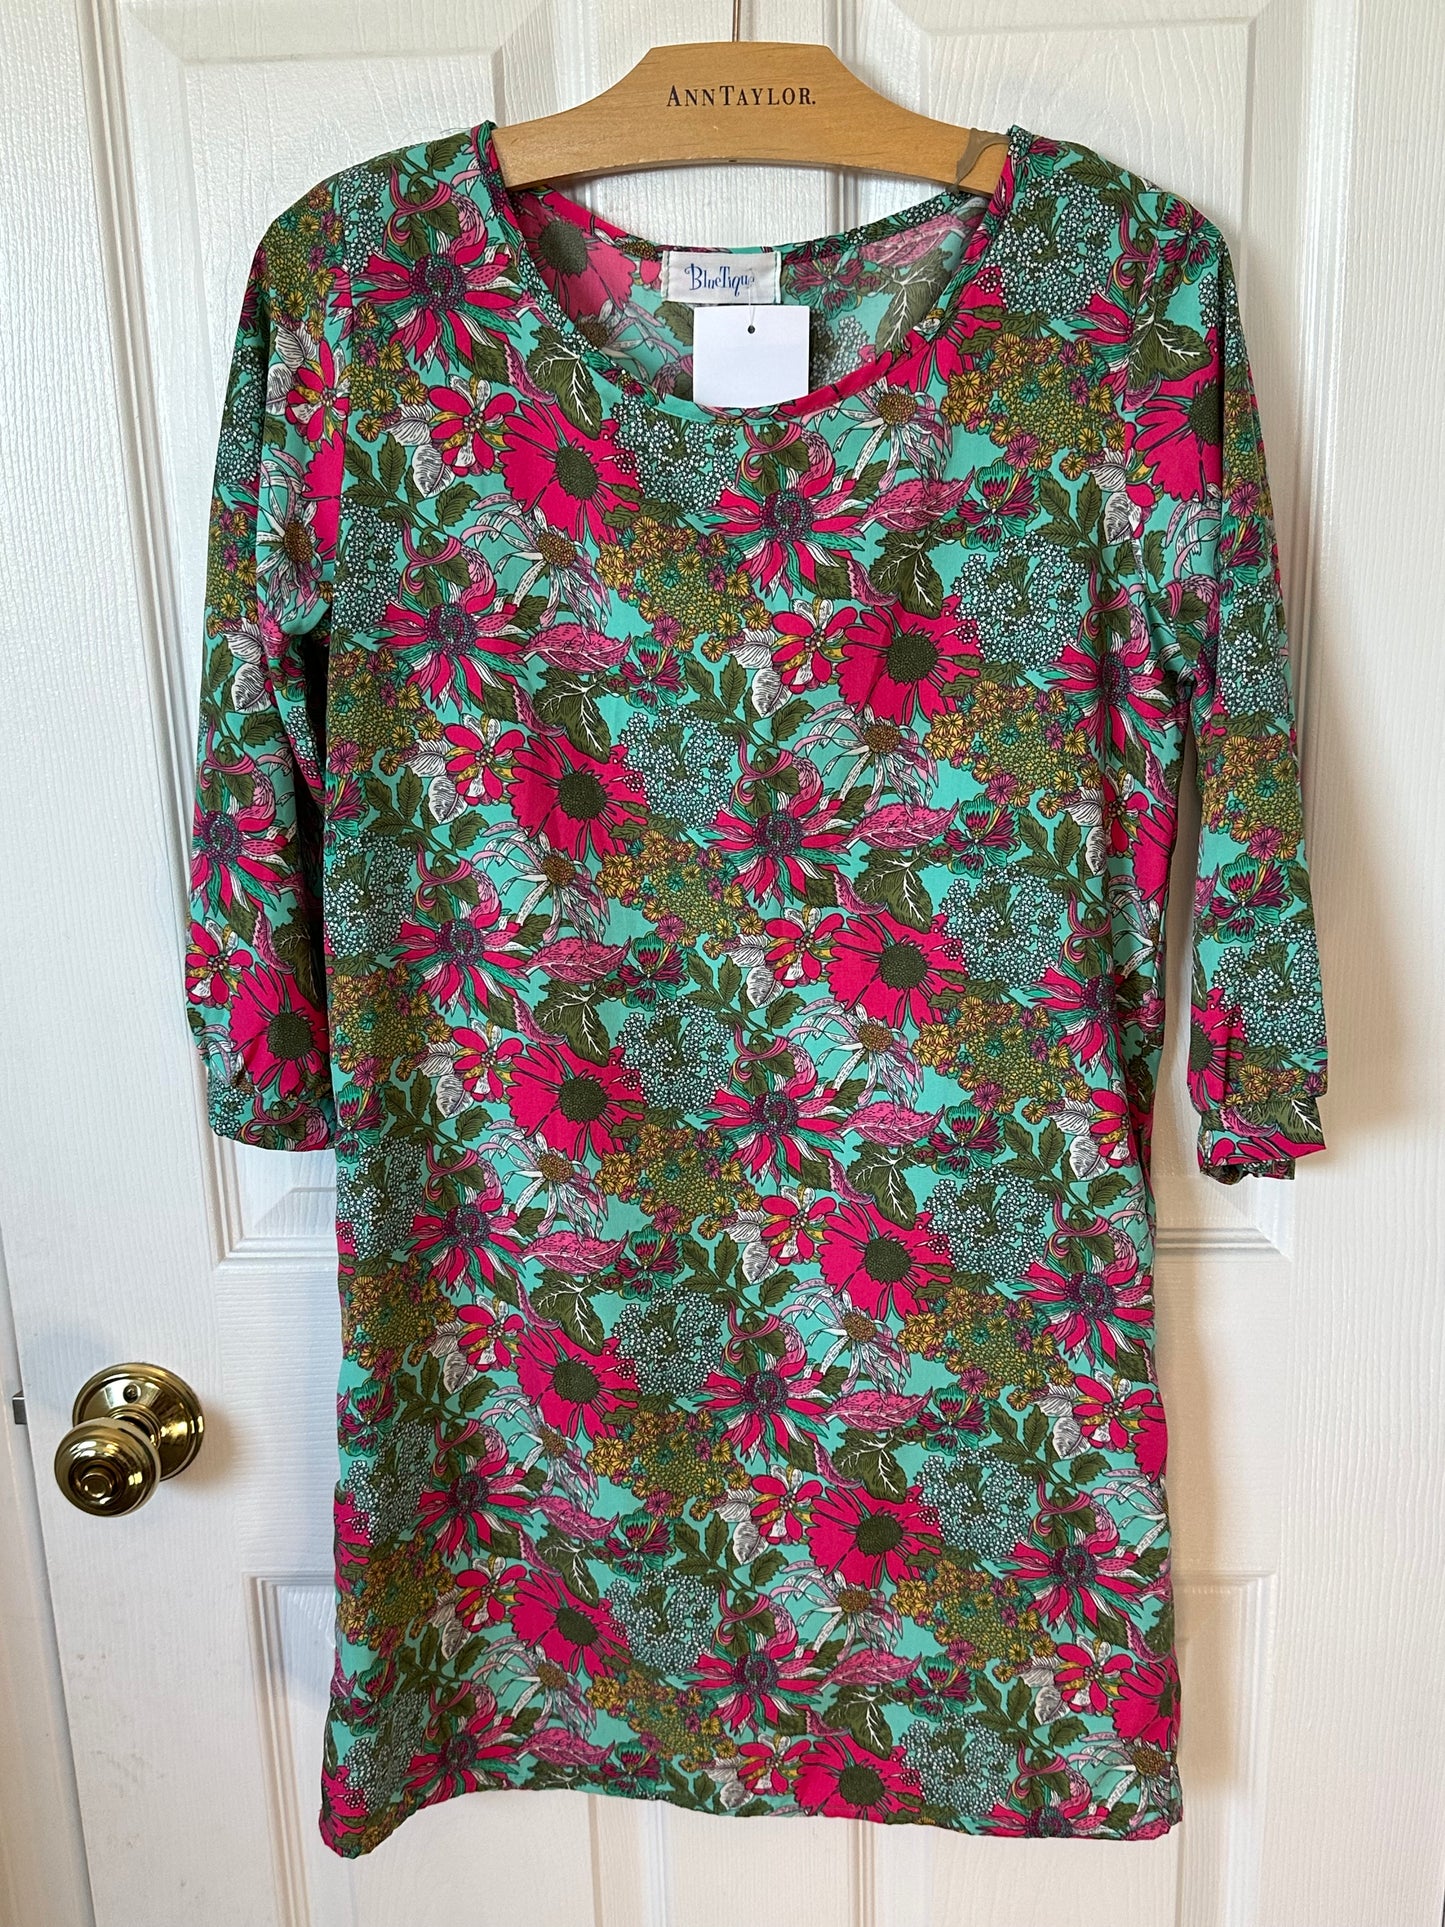 BlueTique Women’s Sz Small Shift Floral Dress Teal Pink Retail $128